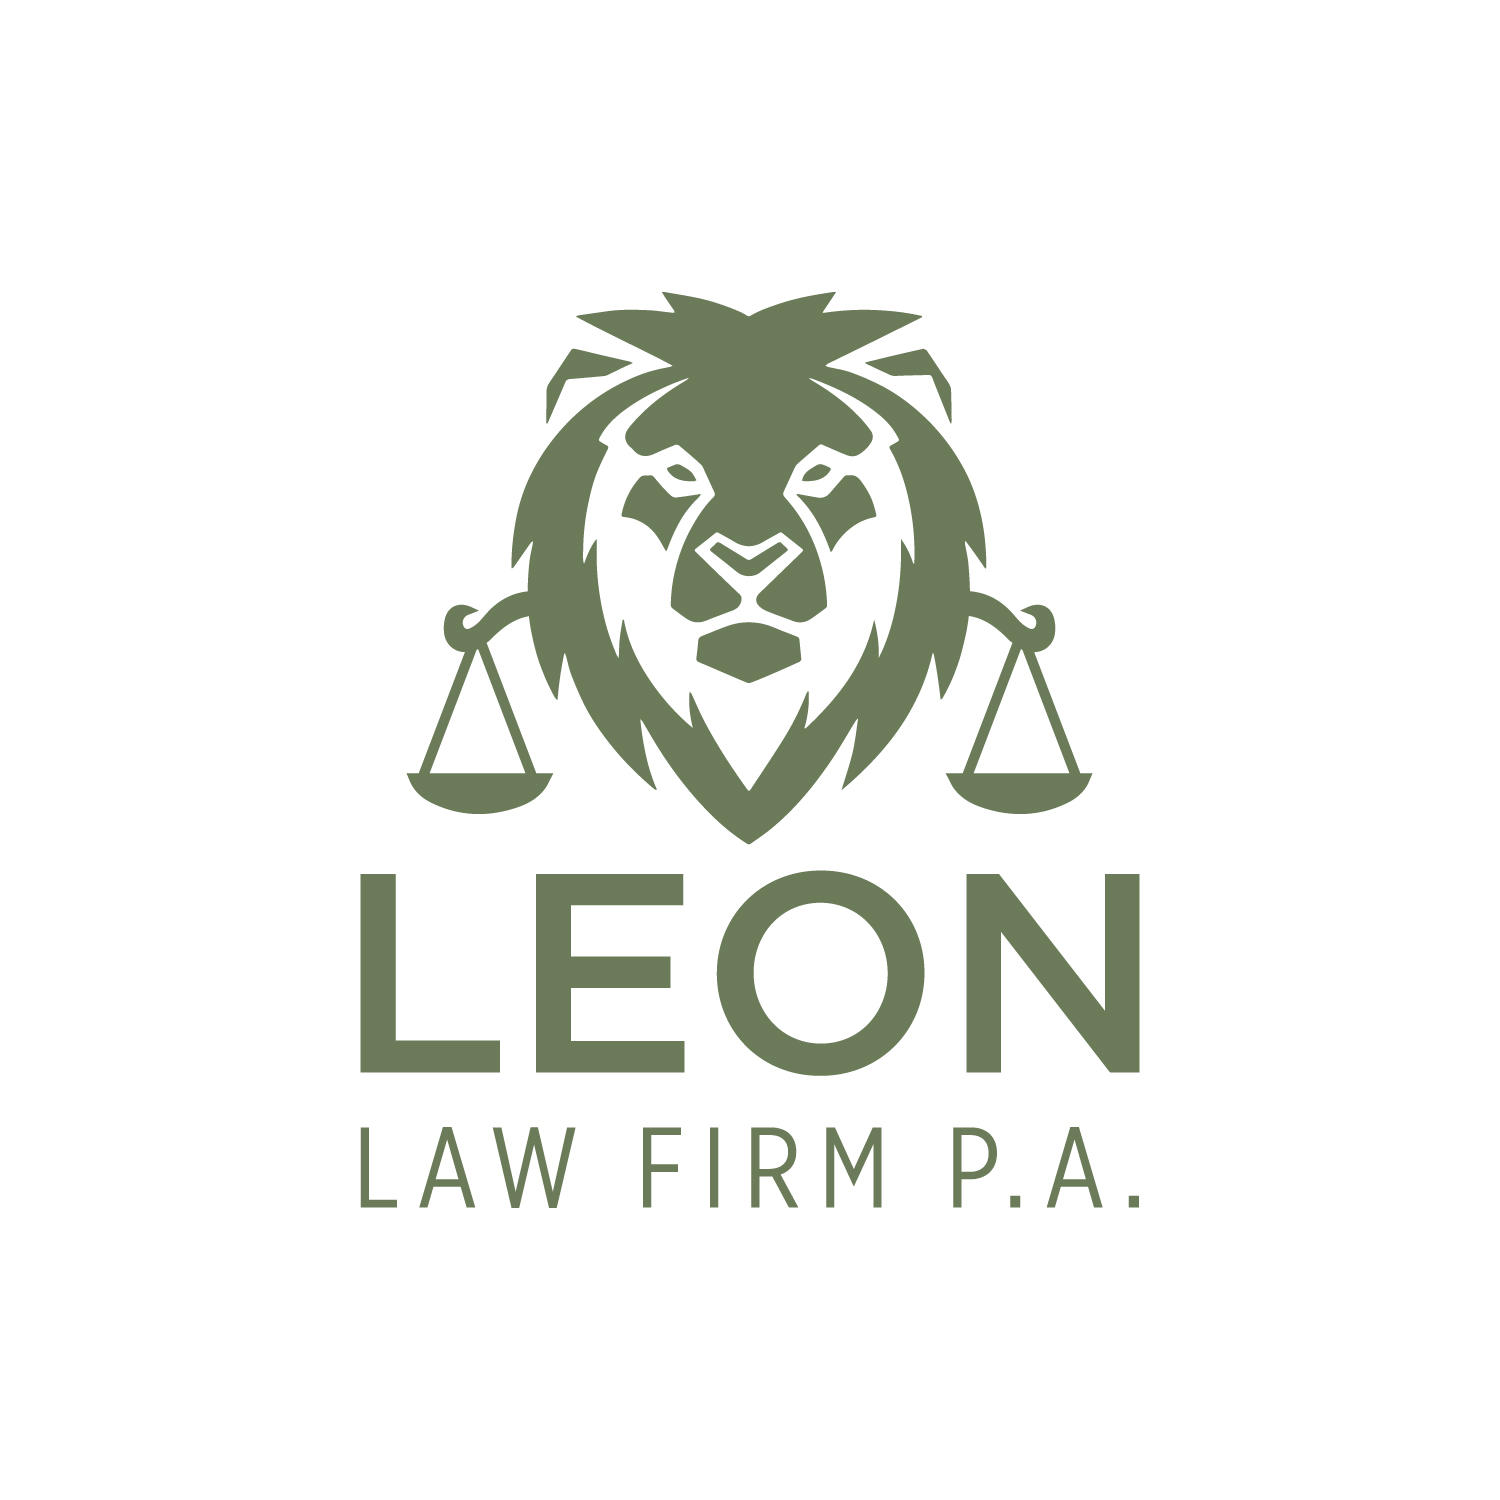 Leon Law Firm P.A. - Doral, FL 33166 - (786)502-2827 | ShowMeLocal.com